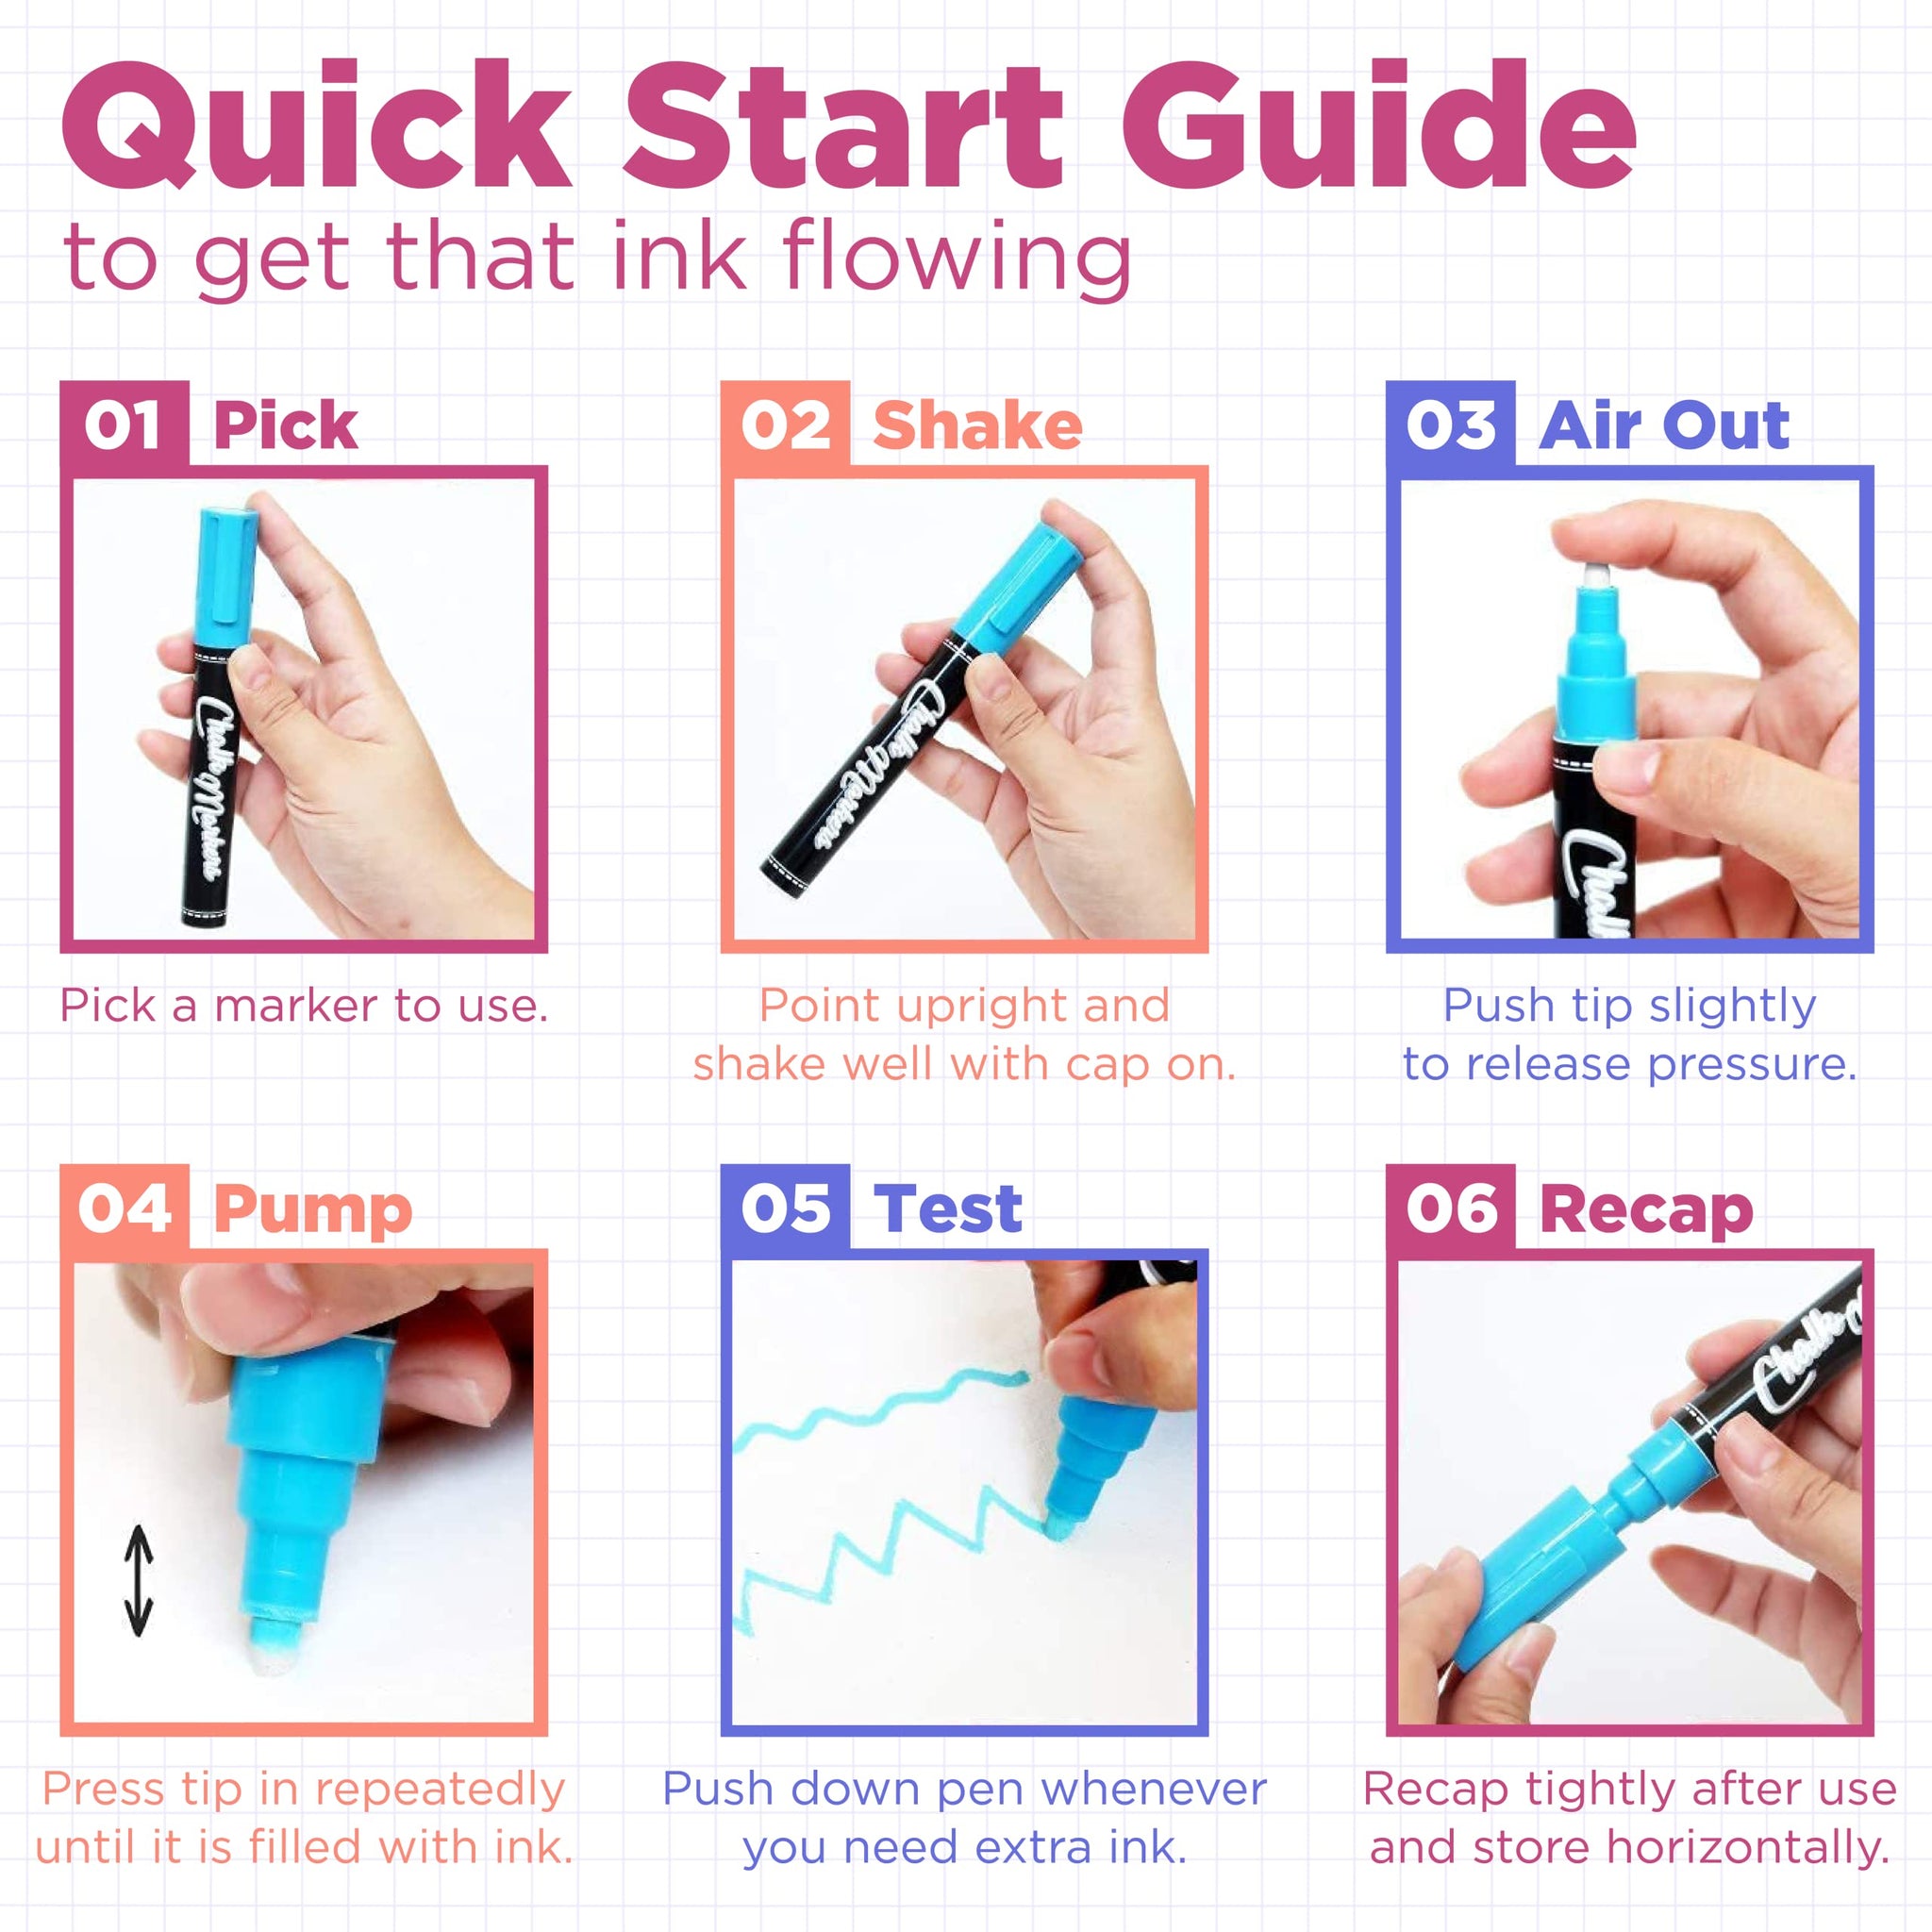 Black Chalk Markers - 6mm Reversible Tip (Pack of 5 Pens